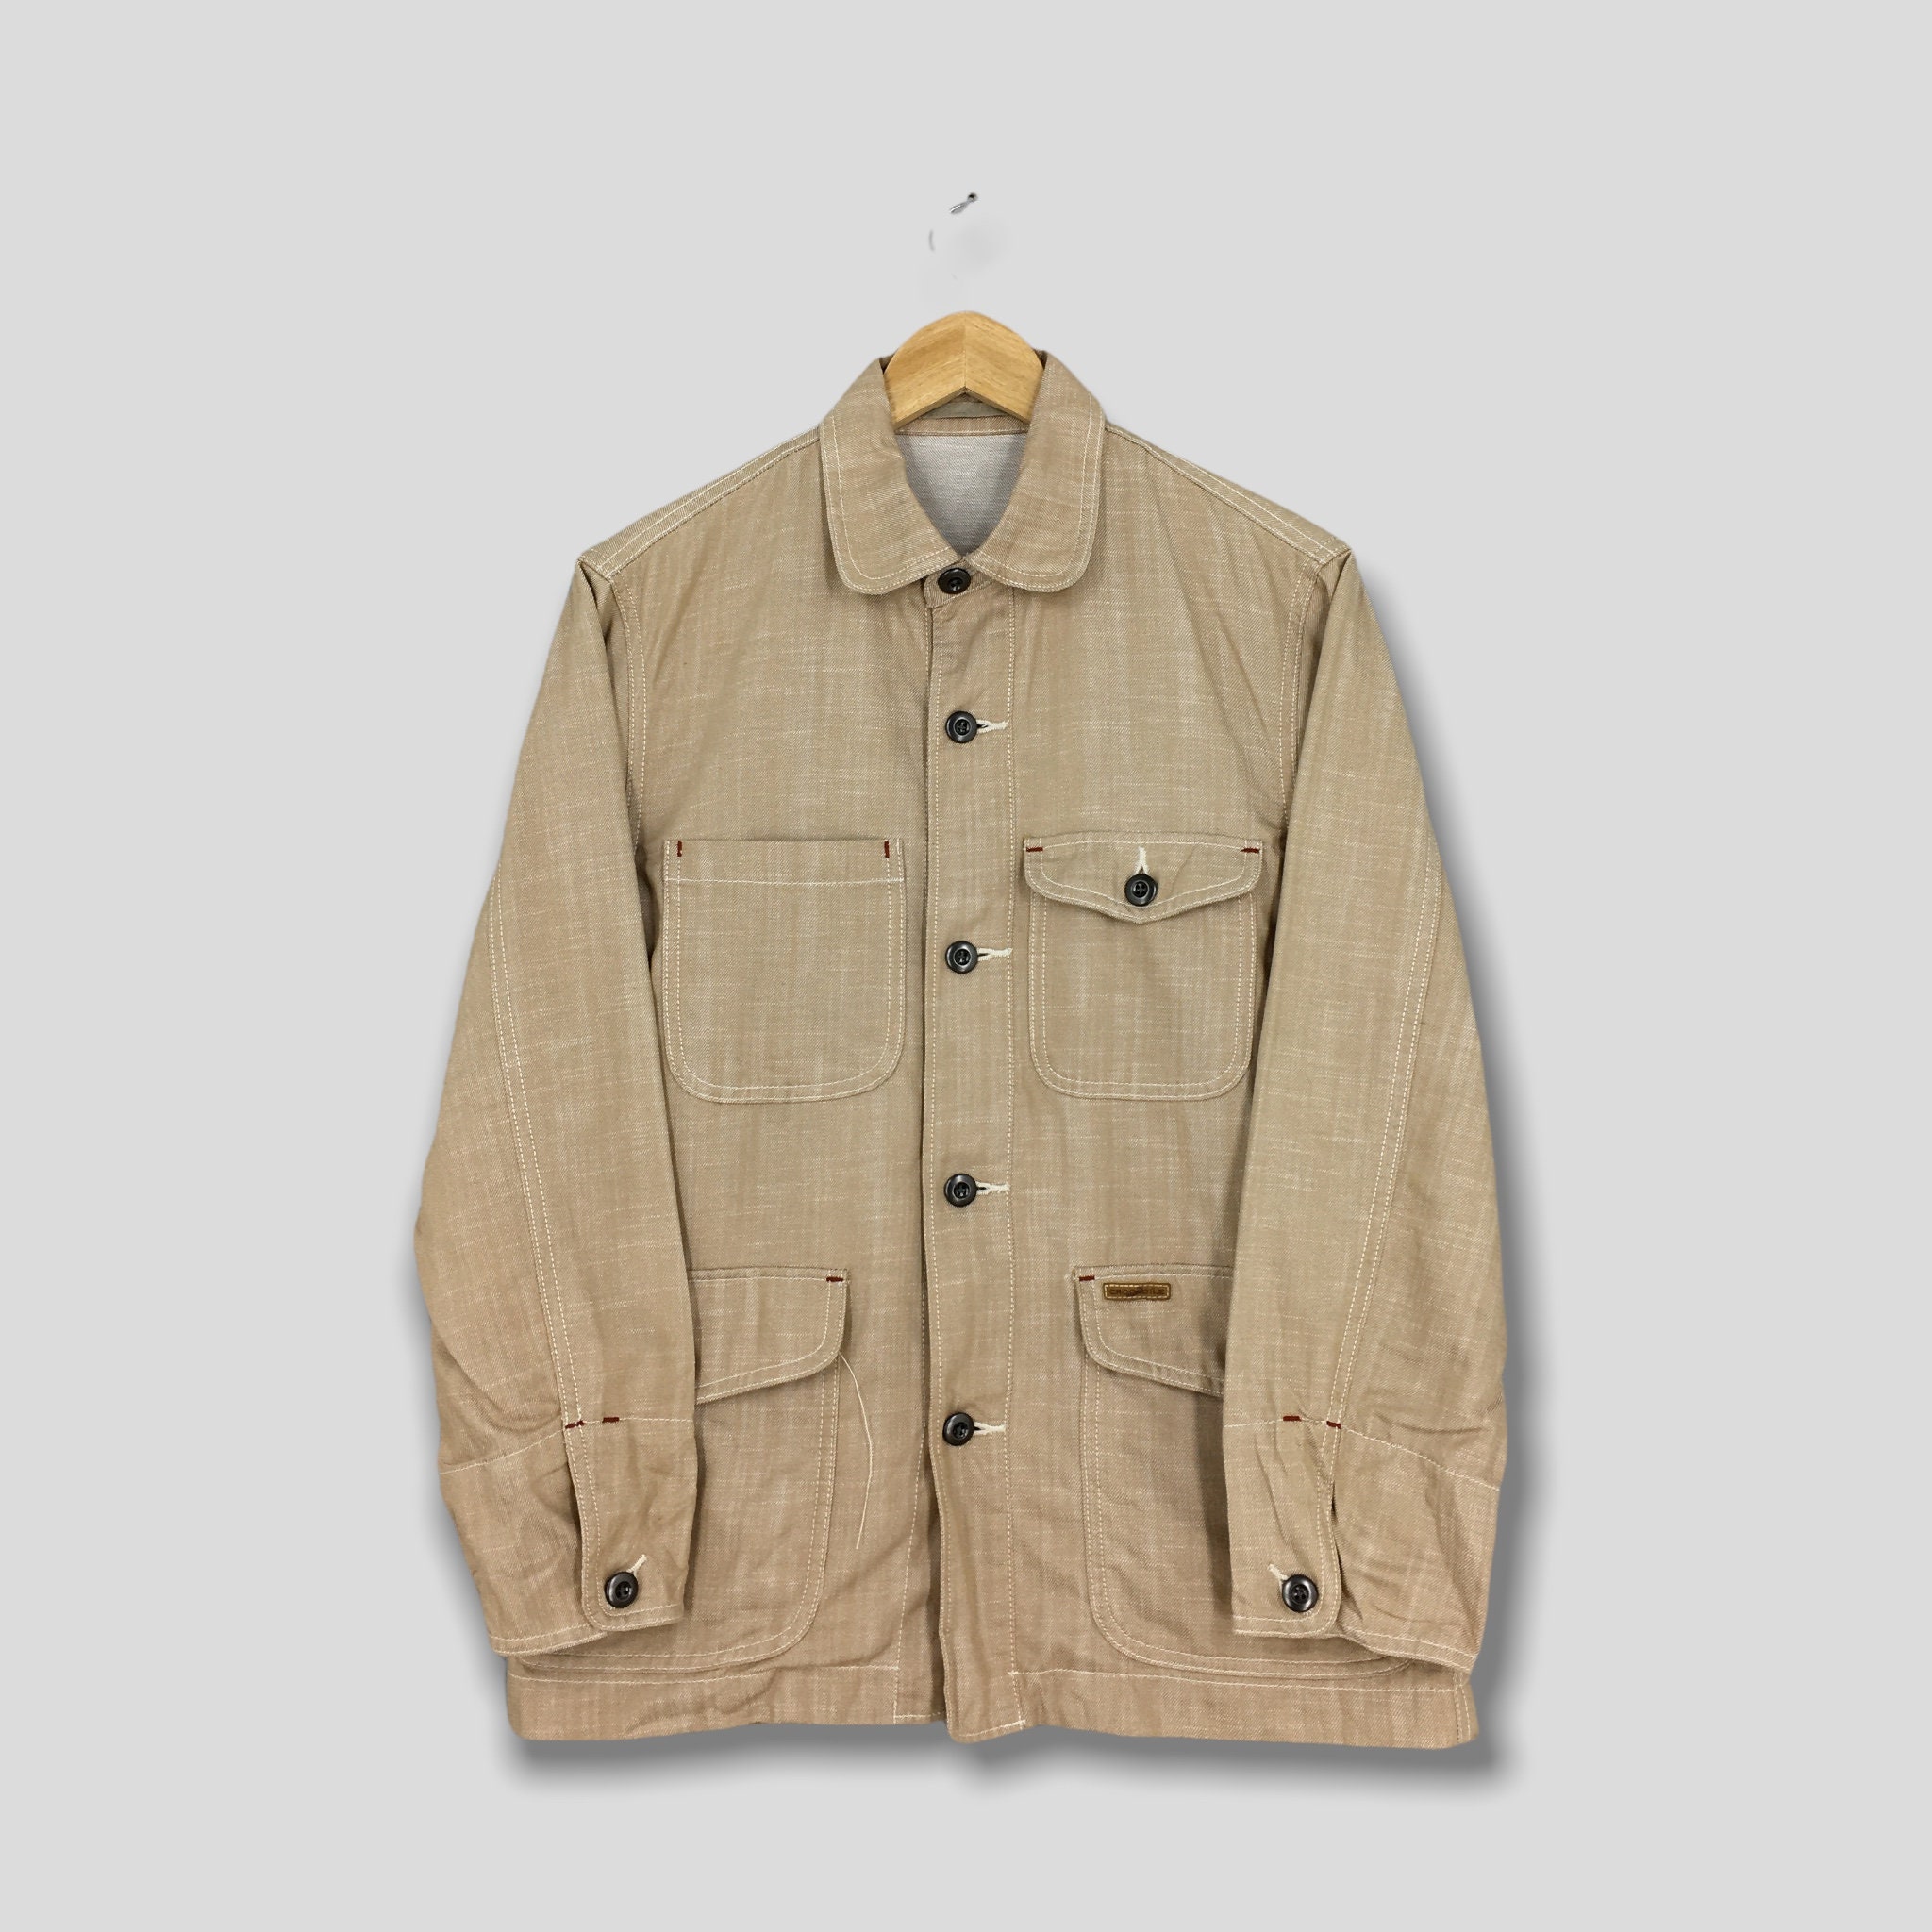 Buy Vintage 90s Crocodile Denim Jacket Medium Four Pockets Online